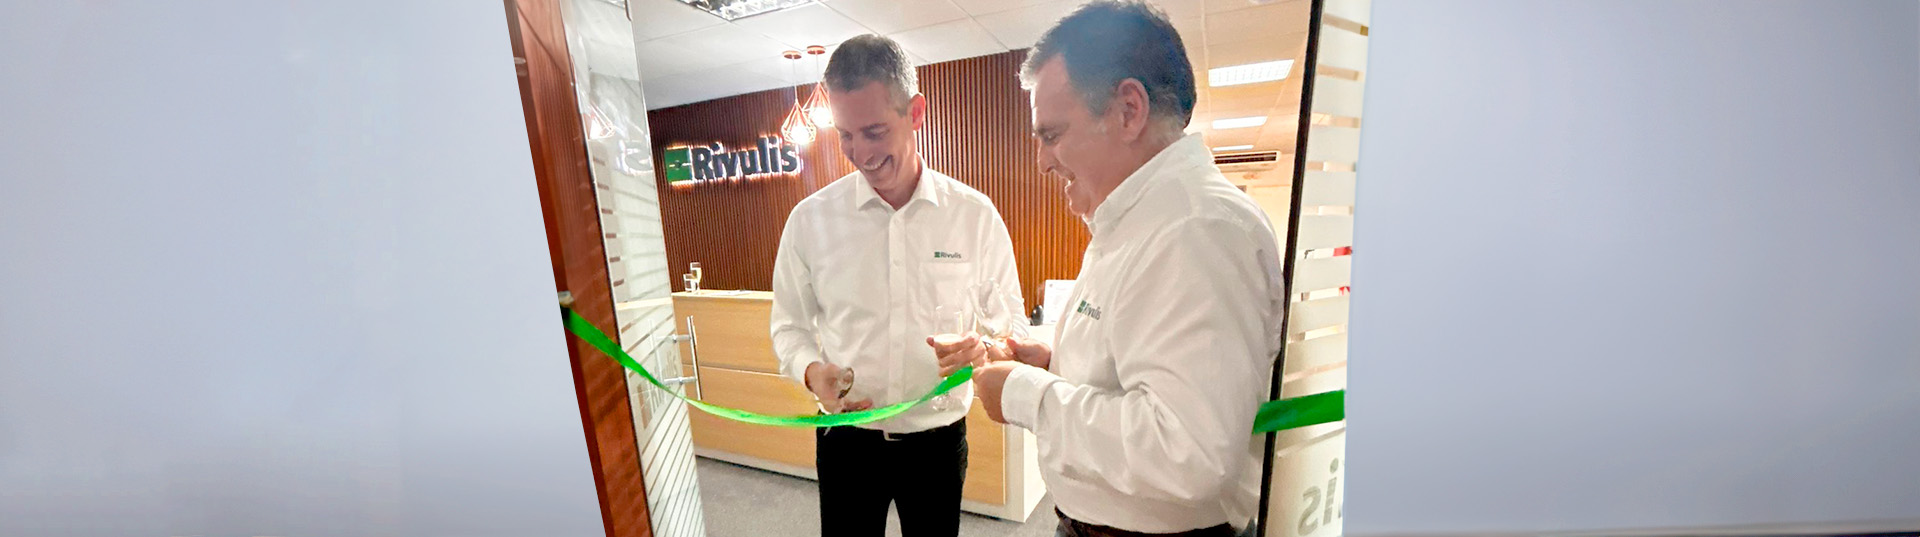 Rivulis Peru Celebrates New Offices in Trujillo & Lima